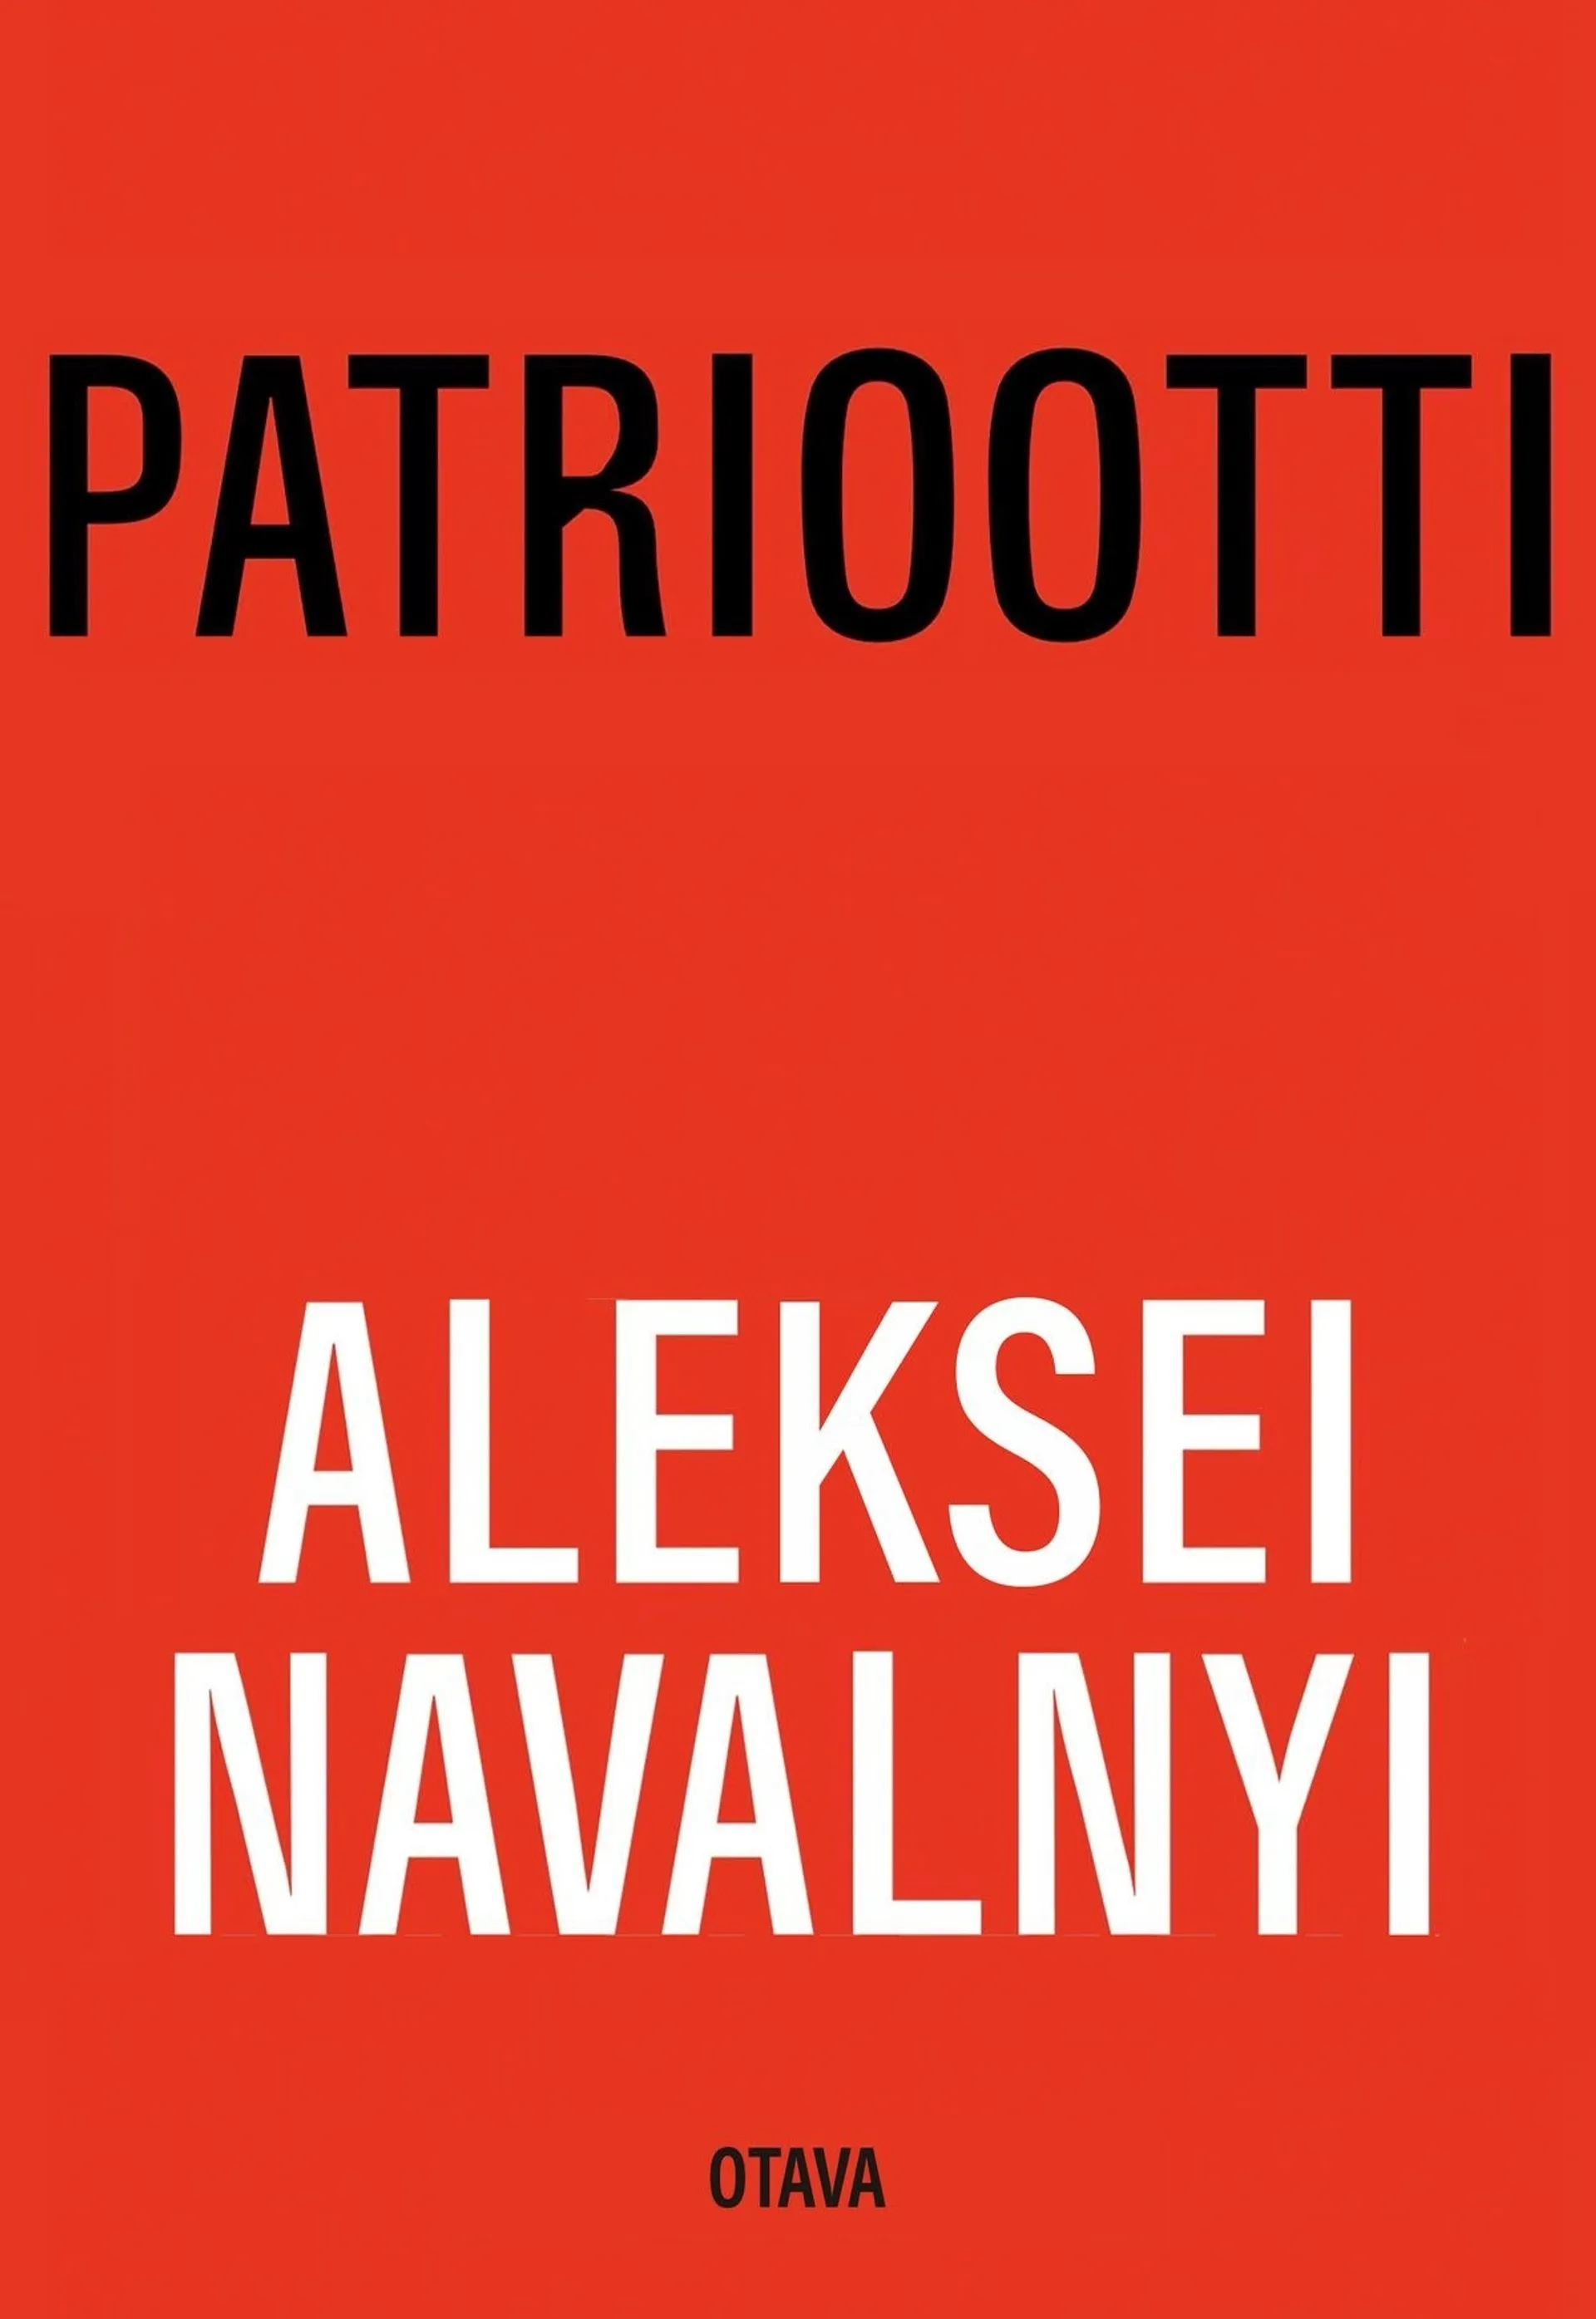 Navalnyi, Patriootti